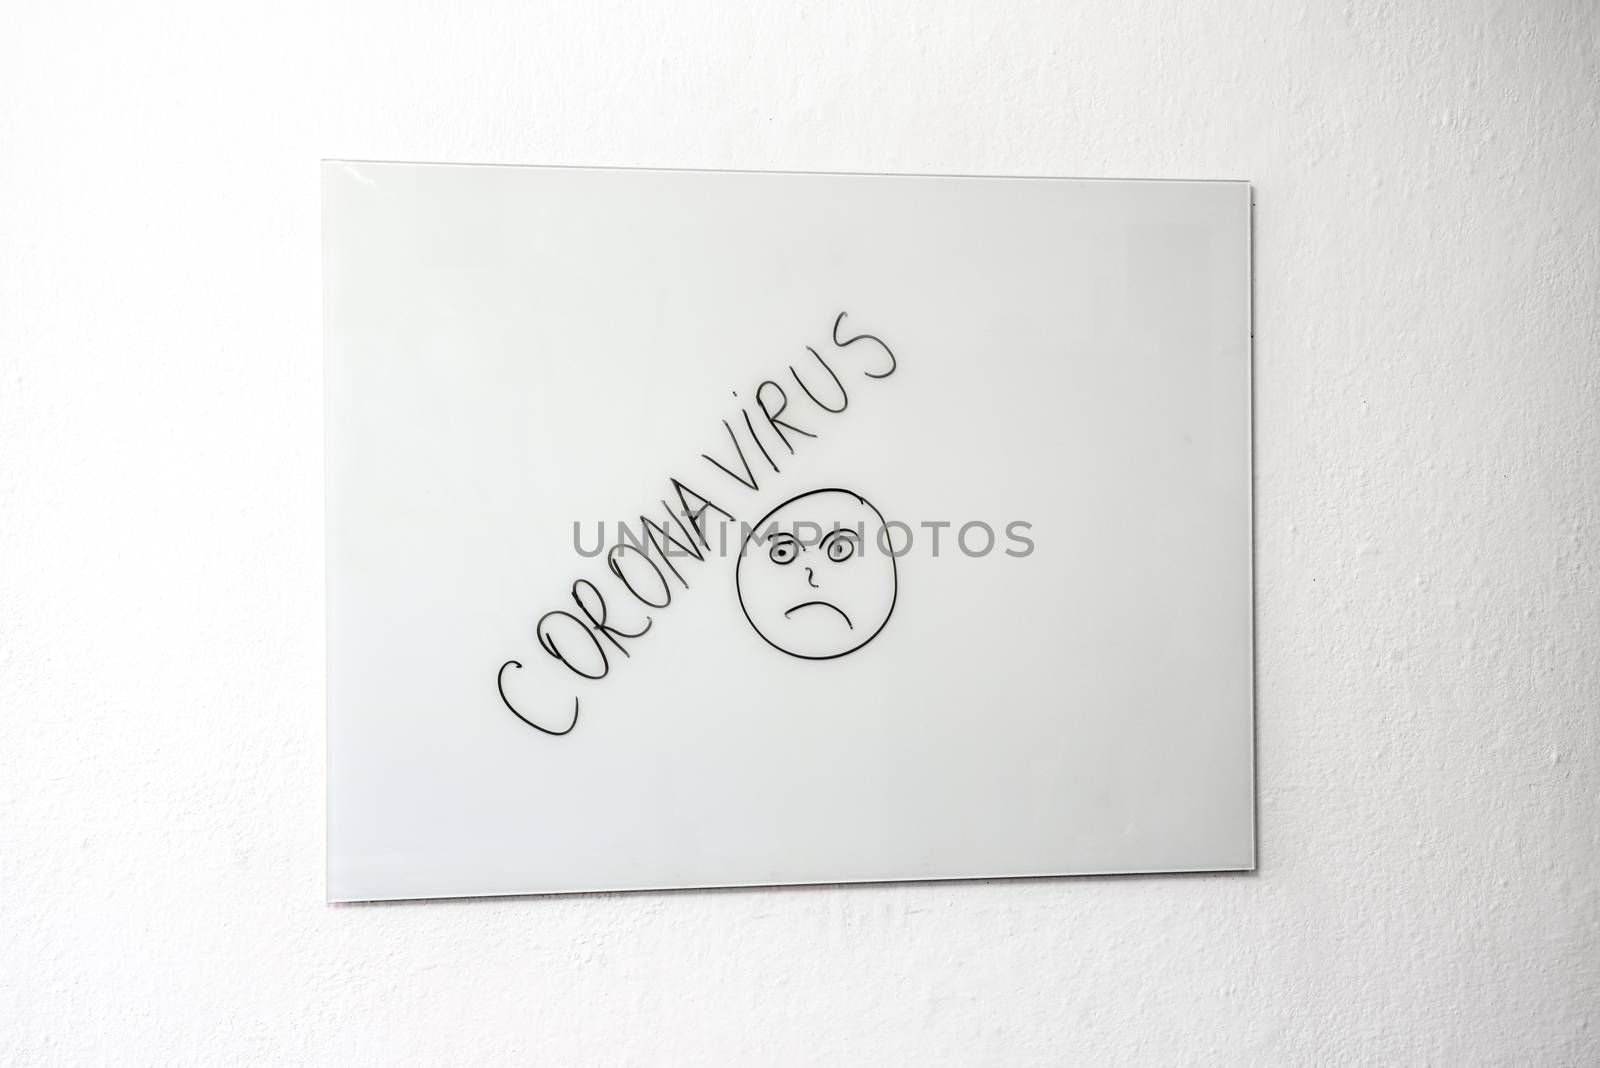 Sad face and Coronavirus message on white board